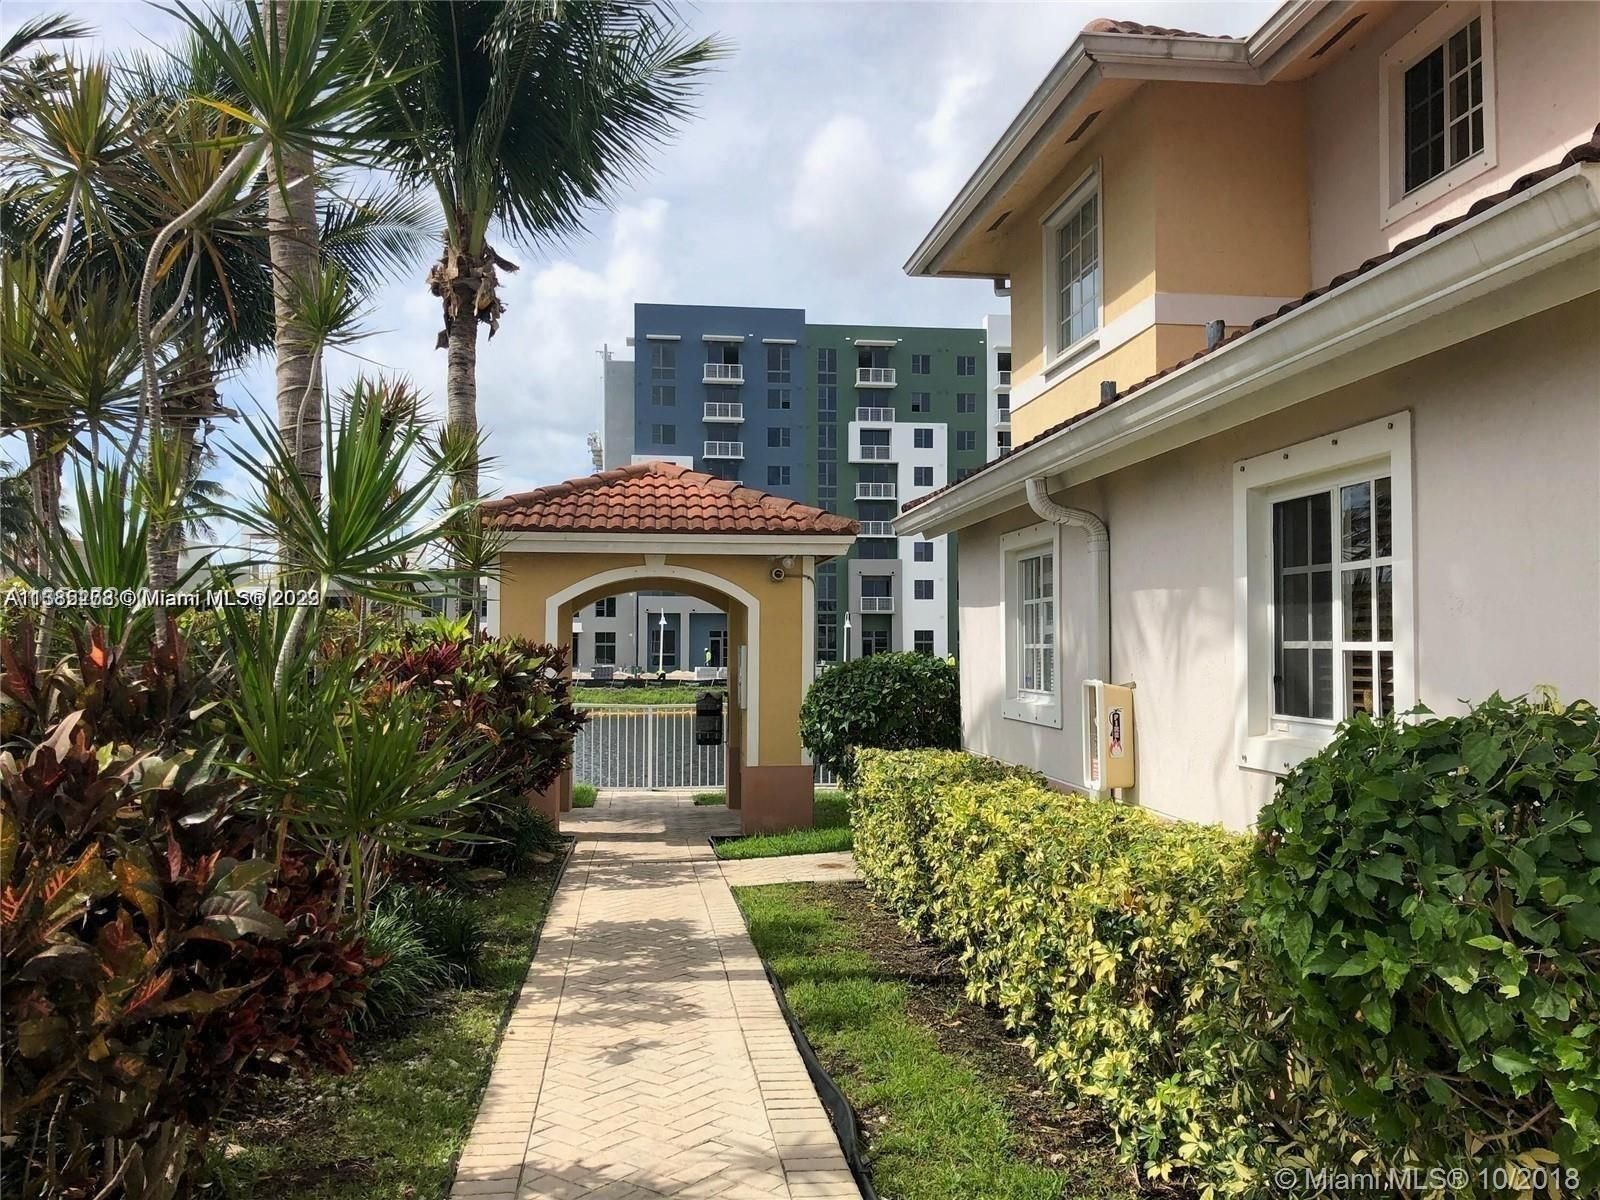 Real estate property located at 2178 167th St #1-107, Miami-Dade County, North Miami Beach, FL